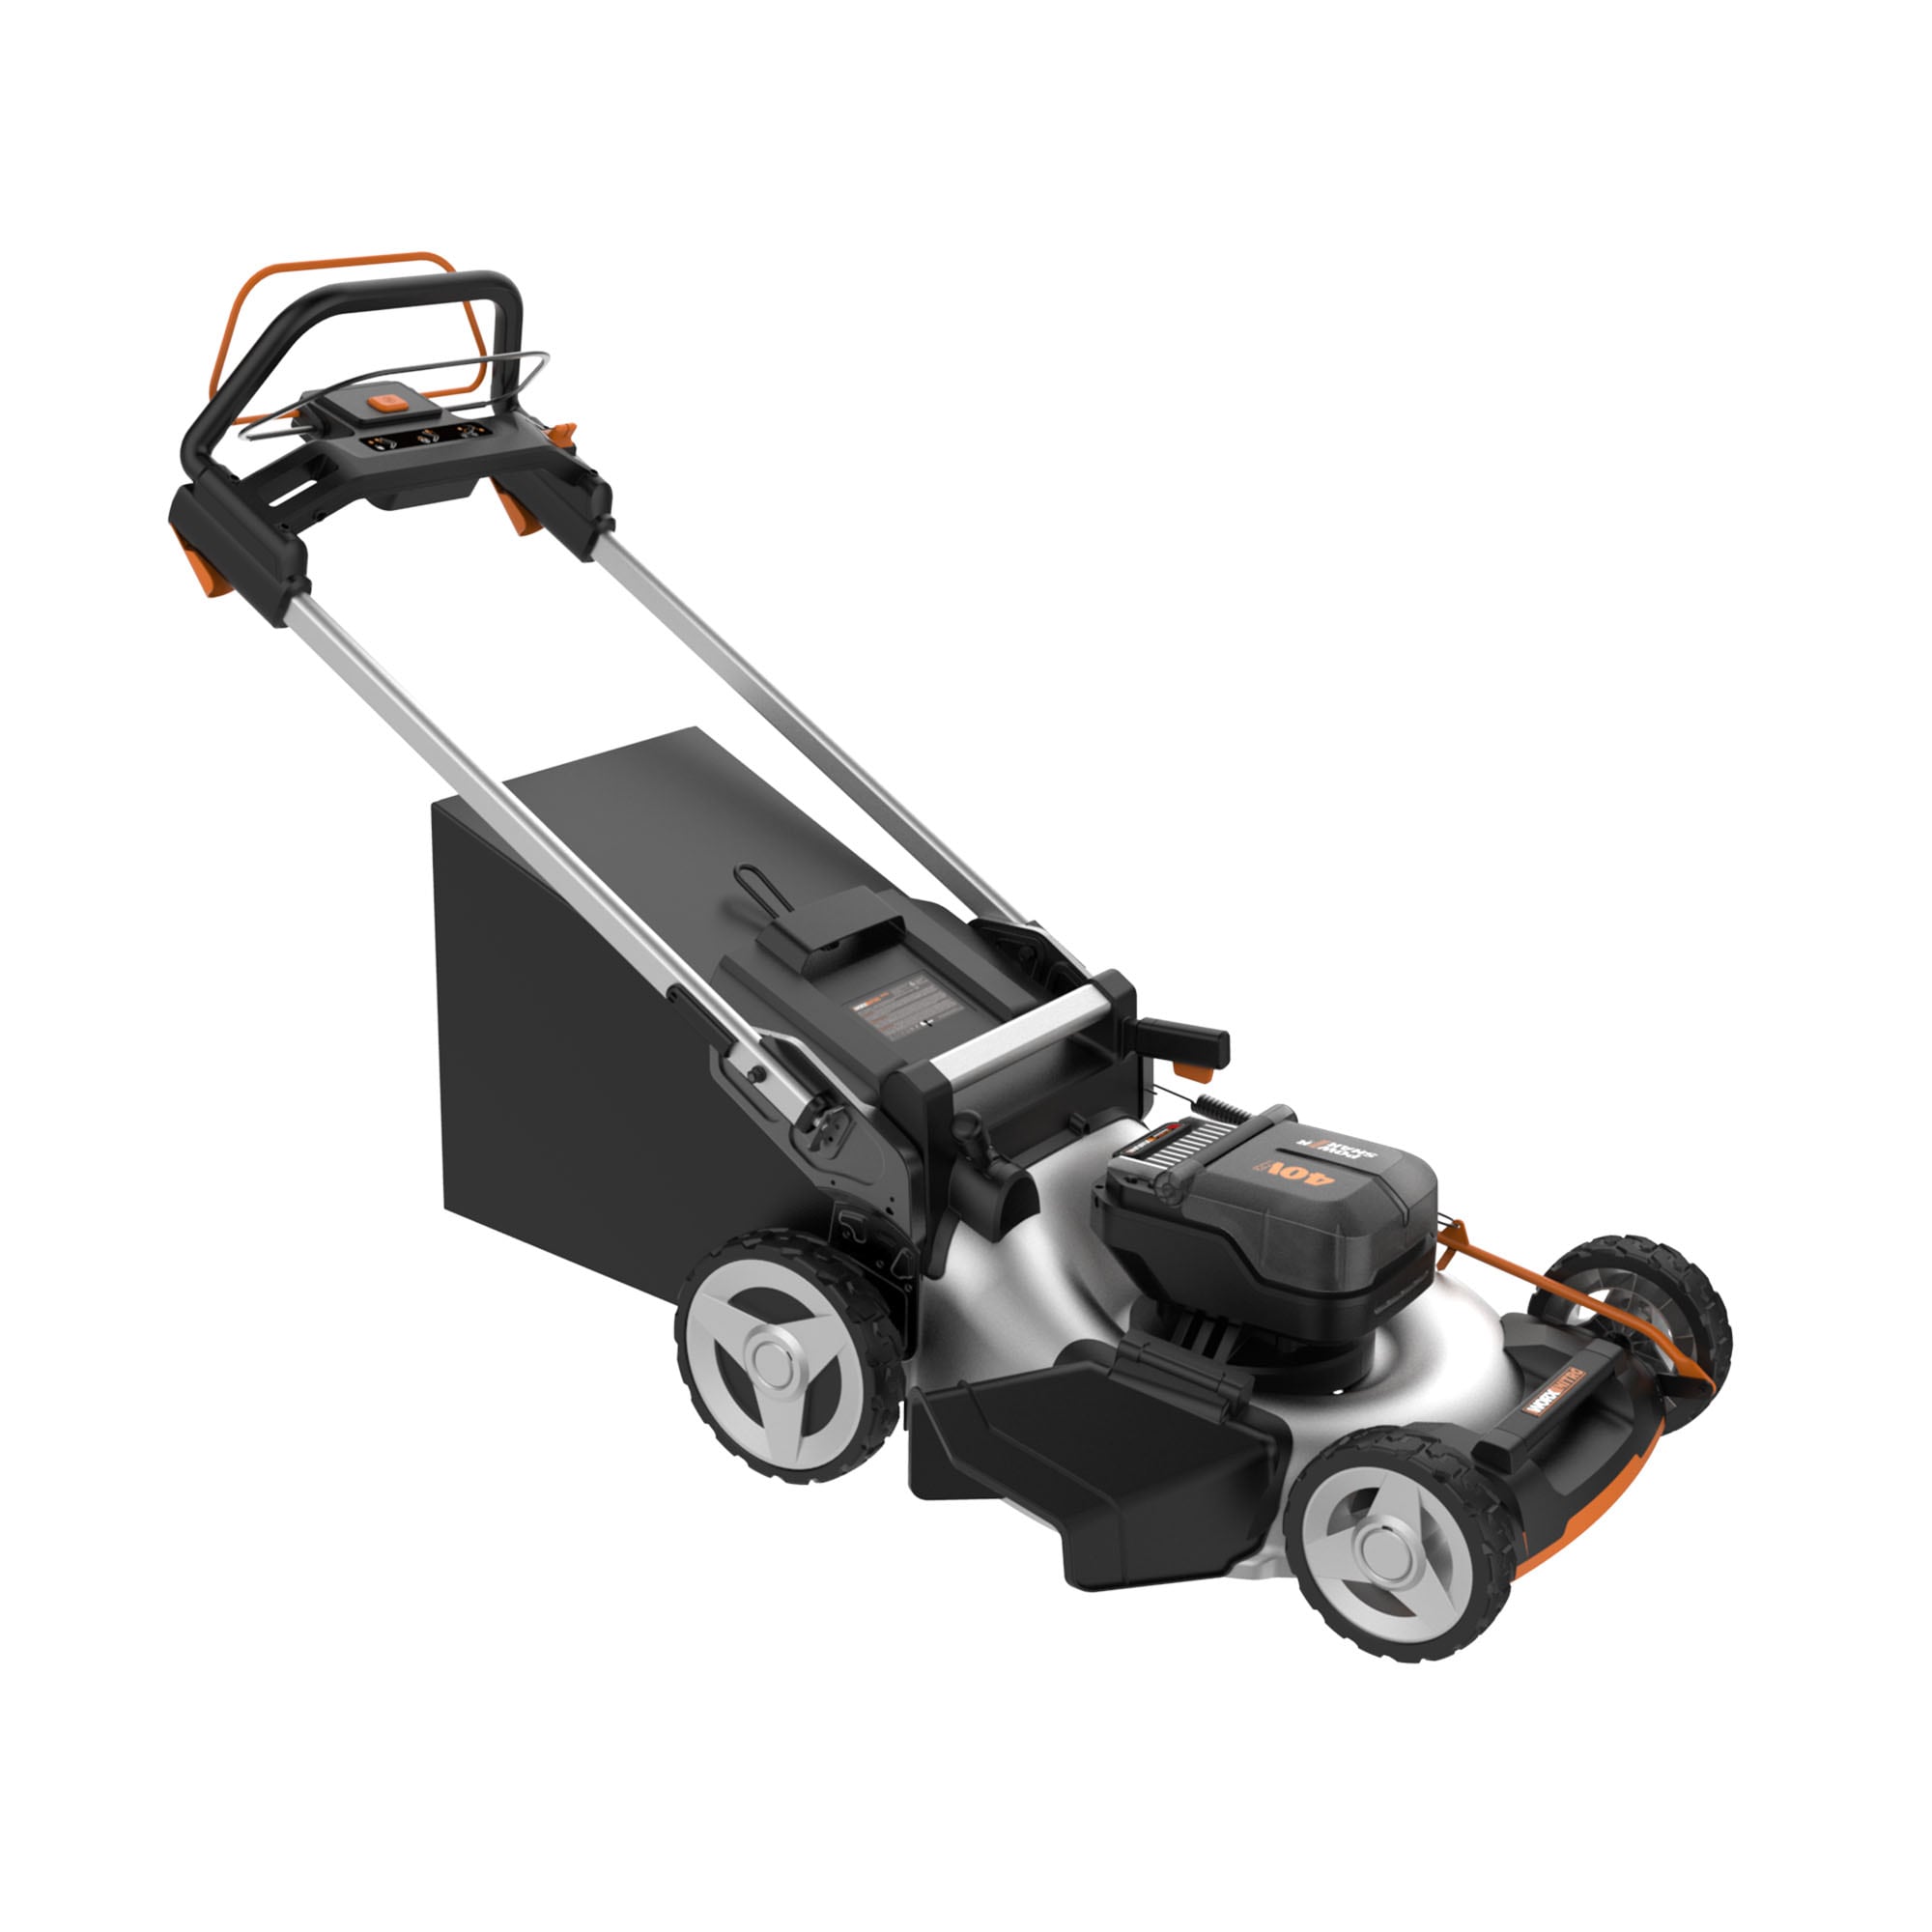 Worx Nitro Wg753 40v Power Share Pro 21 Cordless Self-propelled Lawn Mower  : Target